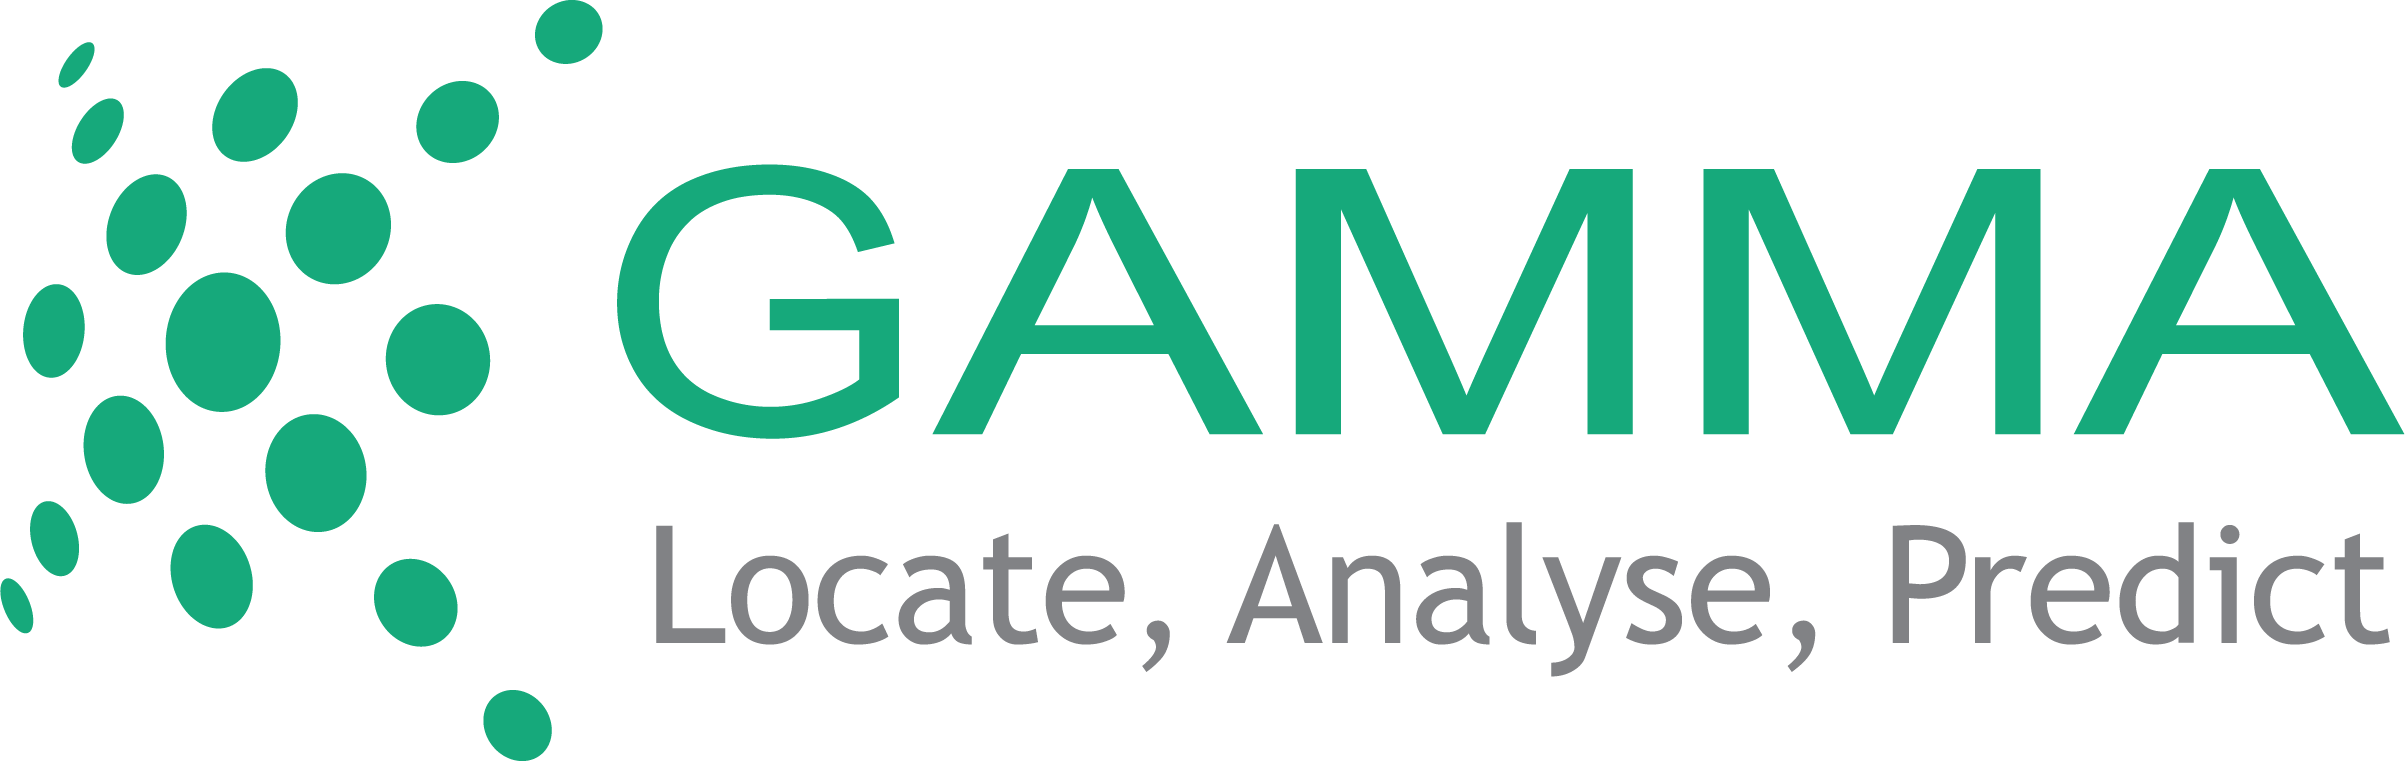 Gamma Line Logo - Gamma Insurance Forum 2018 European Insurance Forum 2018